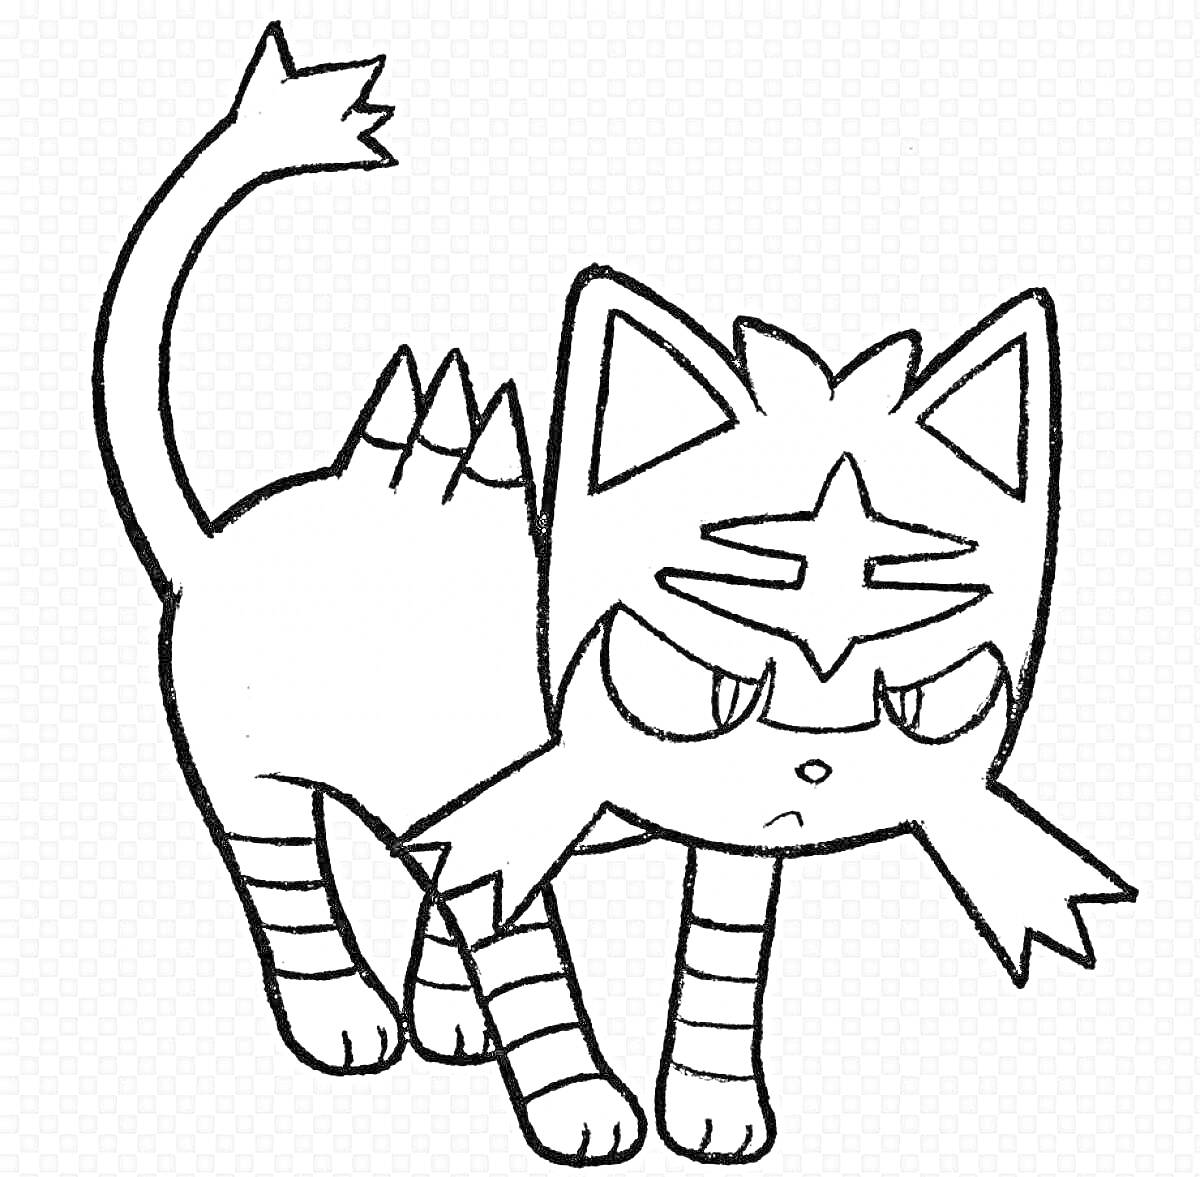 Раскраска Картонный кот с узорами на маске и кольцами на лапах